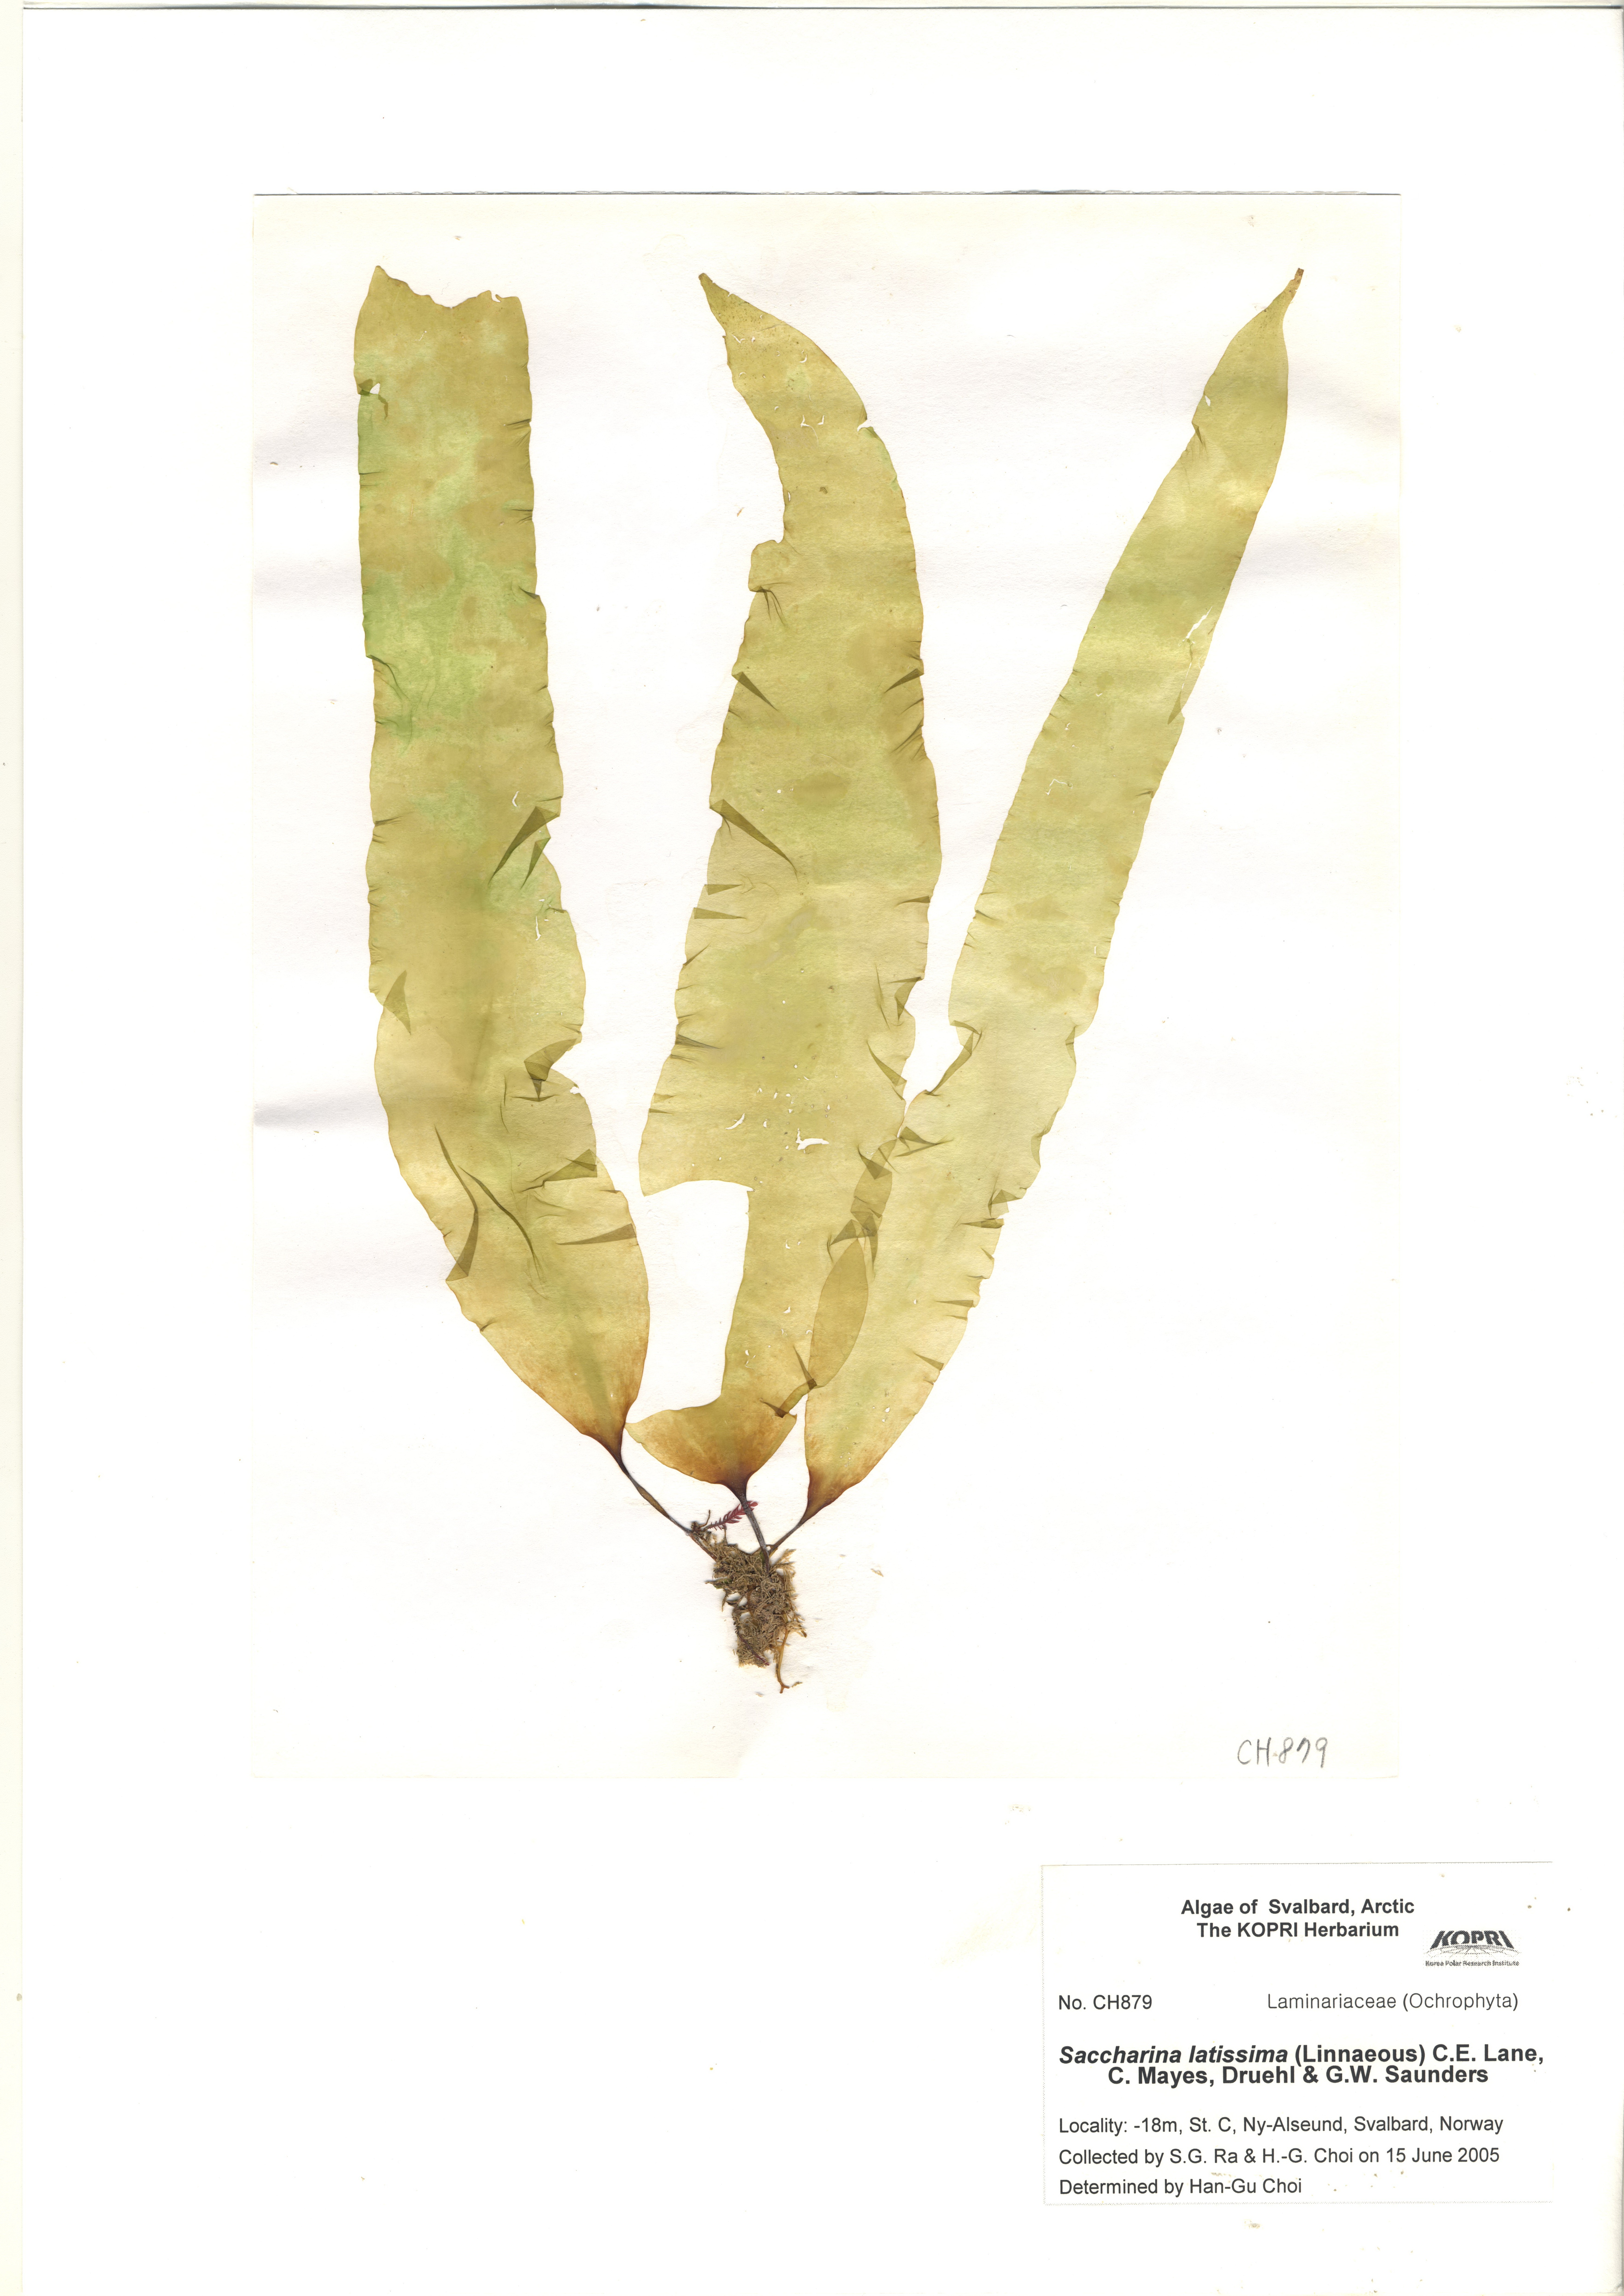 Saccharina latissima (Linnaeus) C.E.Lane, C.Mayes, Druehl & G.W.Saunders 